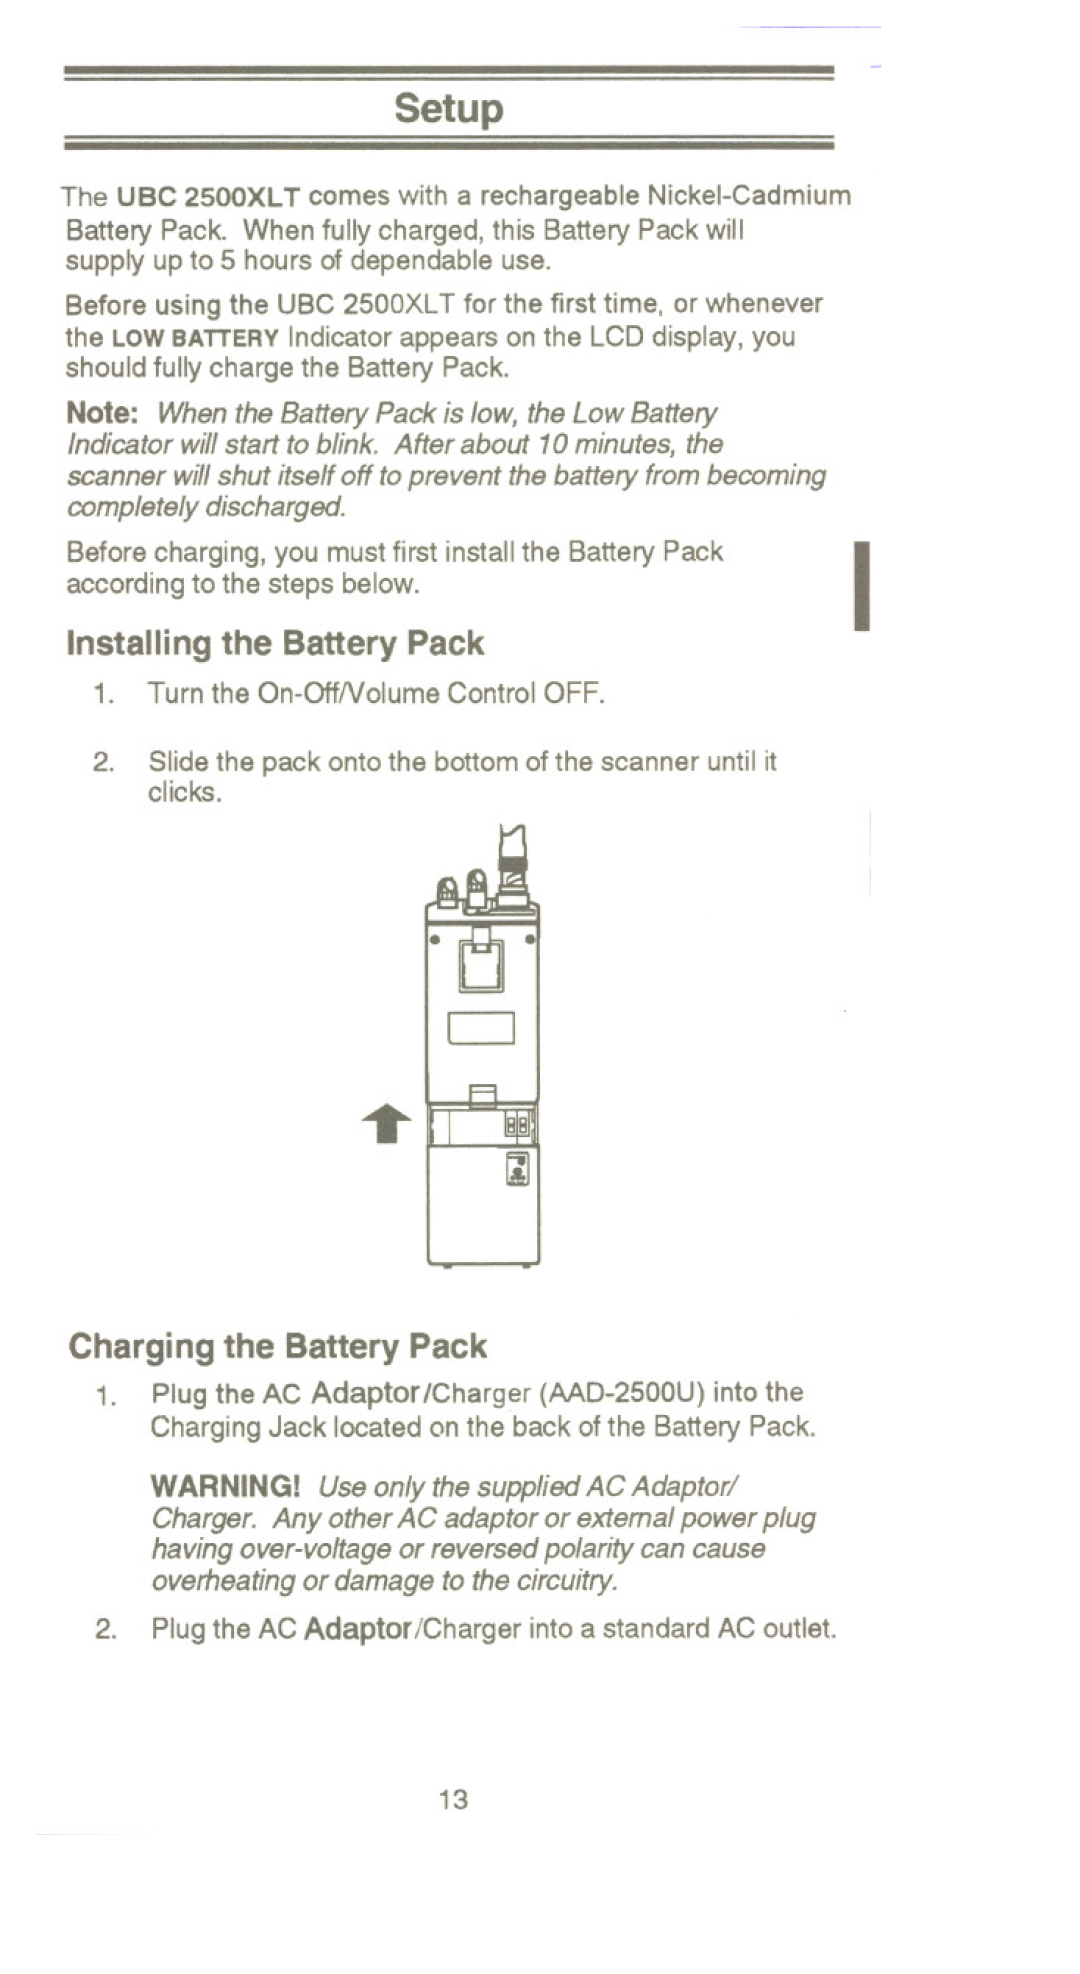 Uniden UBC 2500XLT manual Setup, Installing the Battery Pack, Charging the Battery Pack, Turn the On-OffNolume Control OFF 